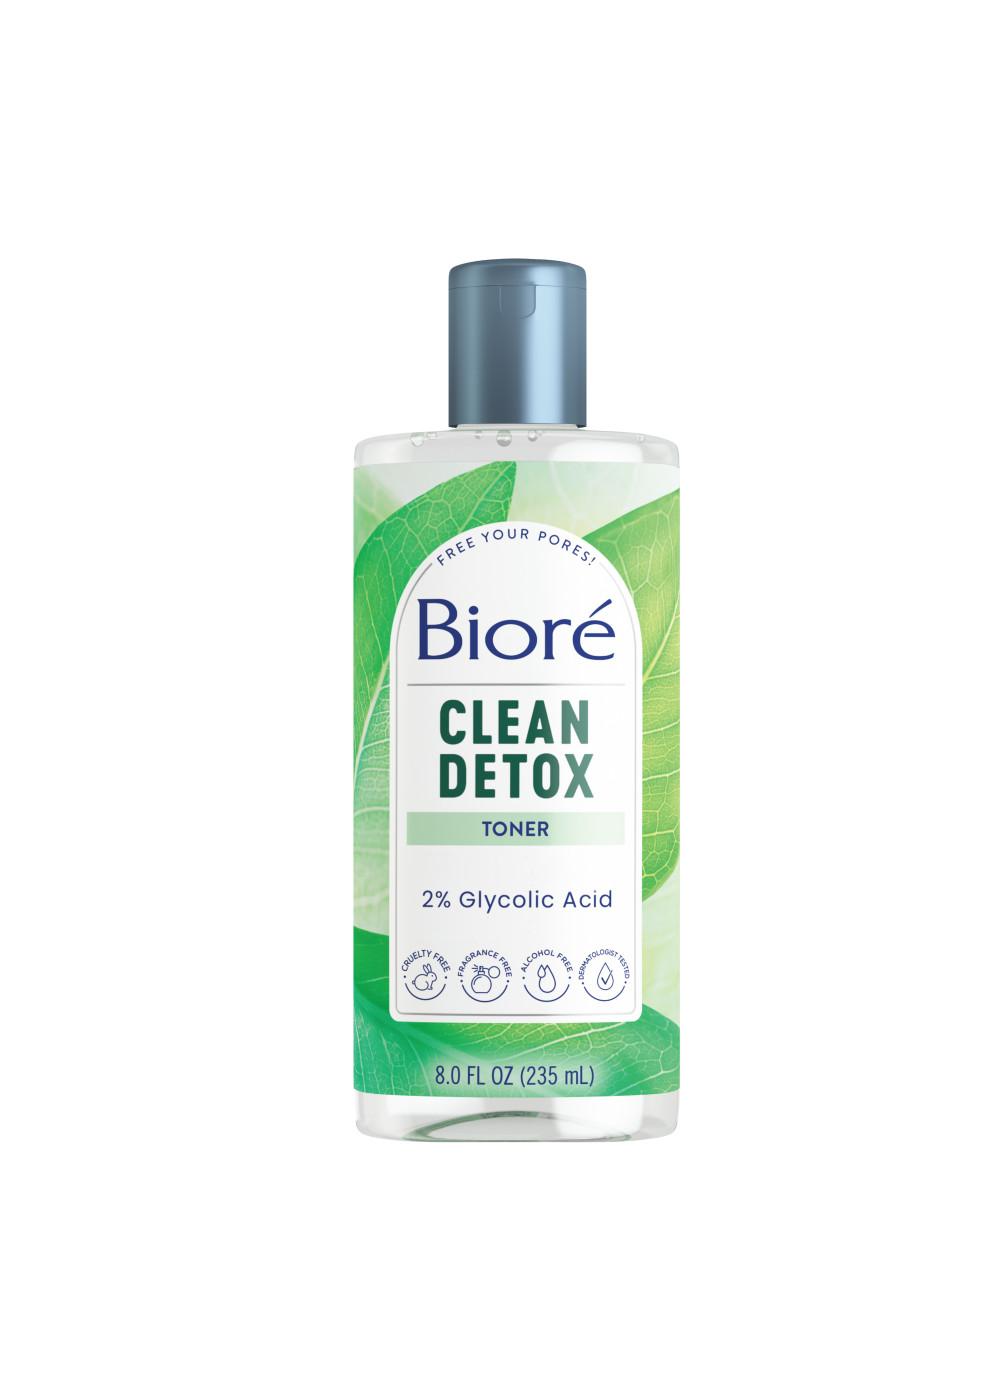 Bioré Clean Detox Toner; image 1 of 8